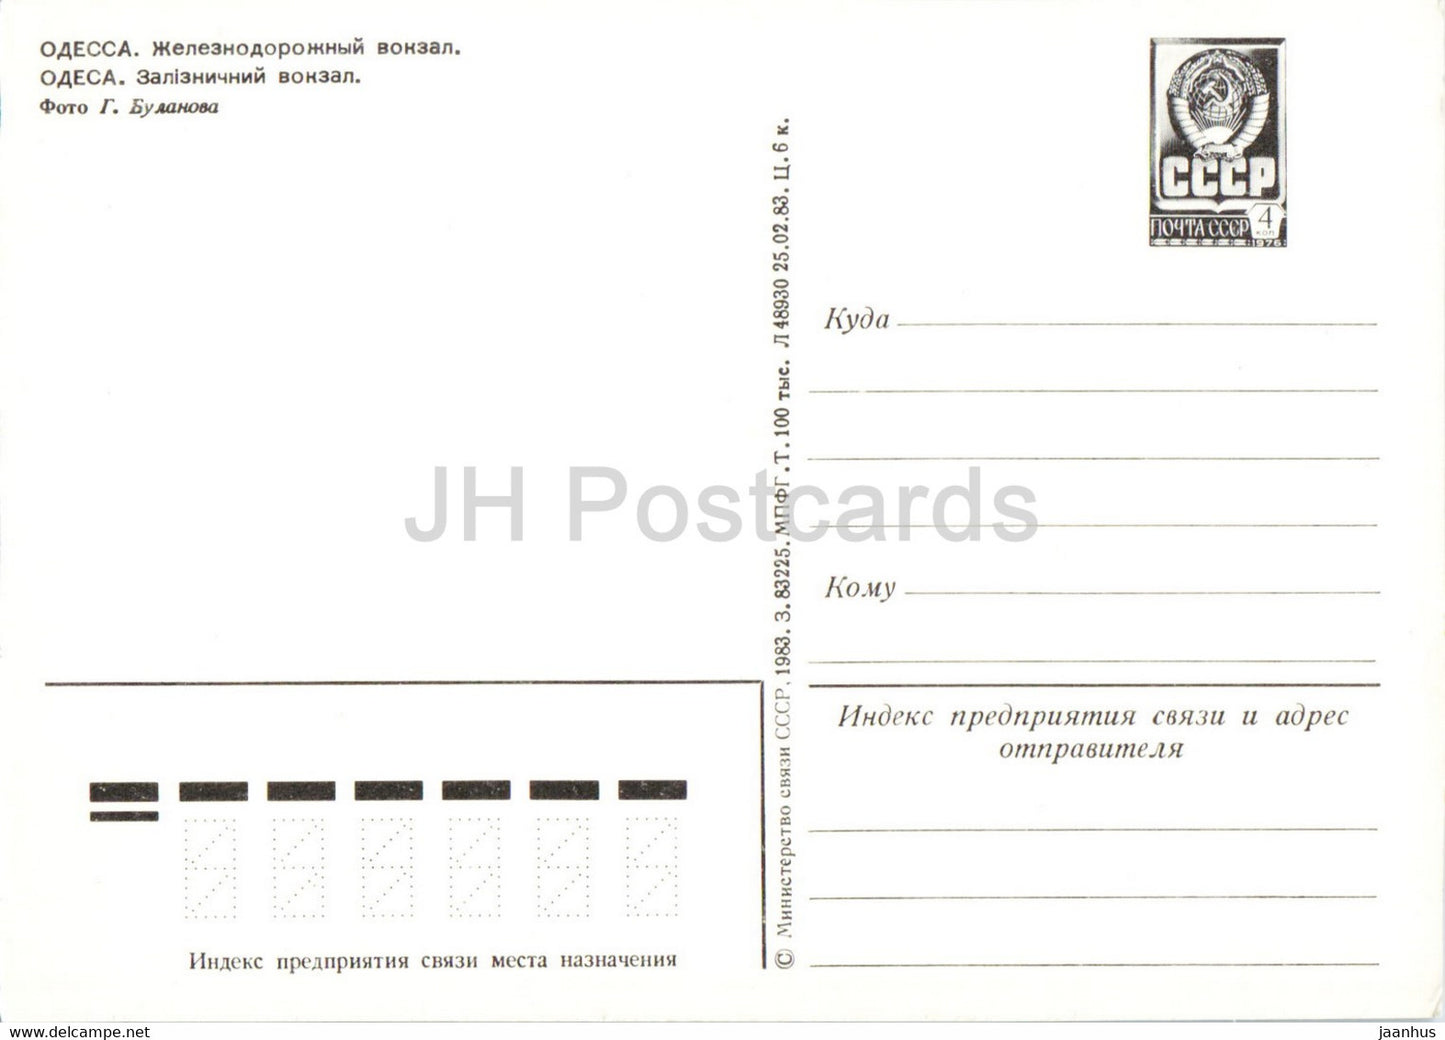 Odessa - Gare - entier postal - 1983 - Ukraine URSS - inutilisé